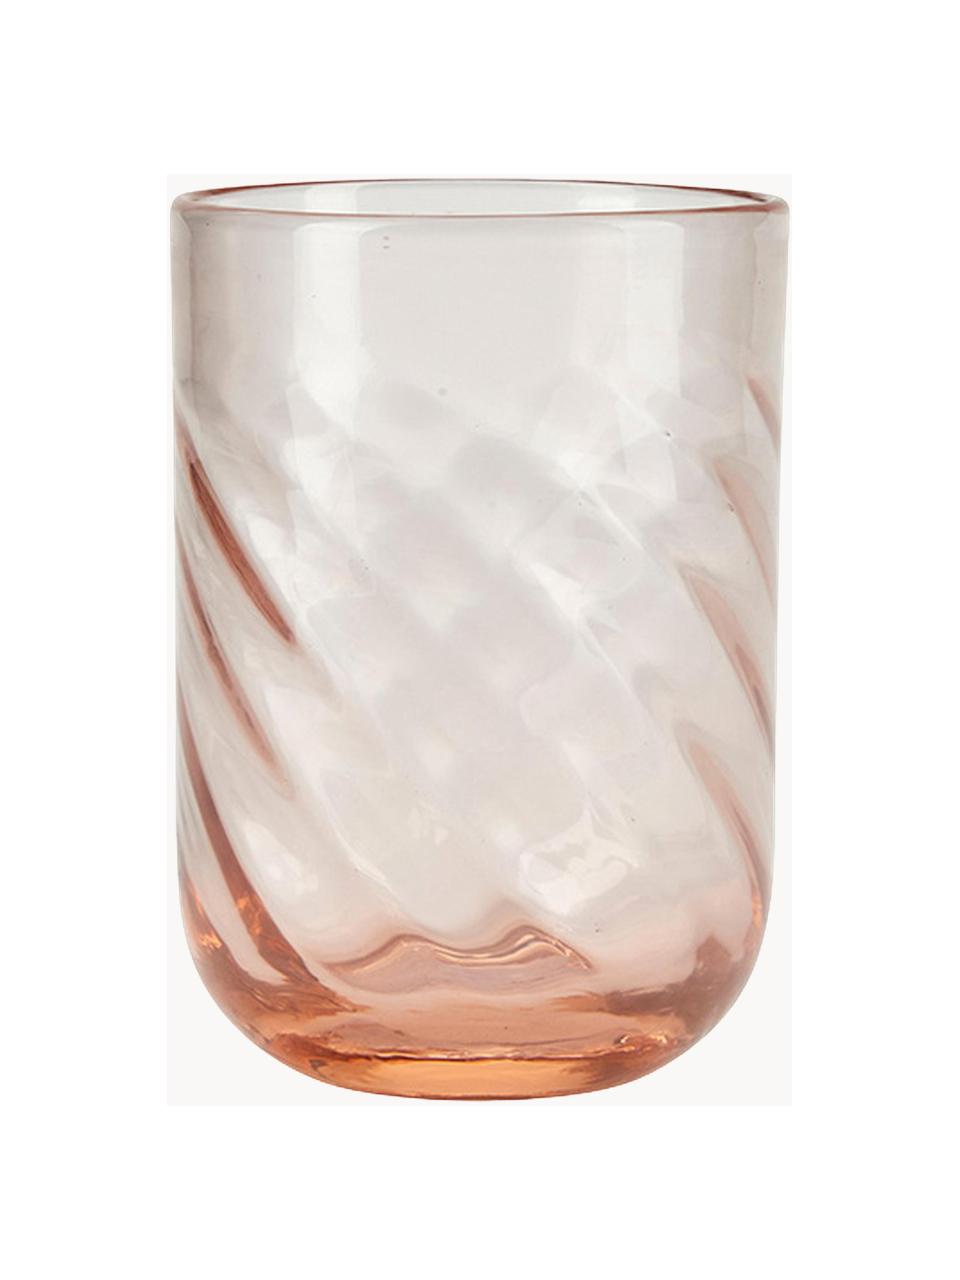 Waterglazen Twist, 4 stuks, Glas, Roze, Ø 8 x H 11 cm, 300 ml